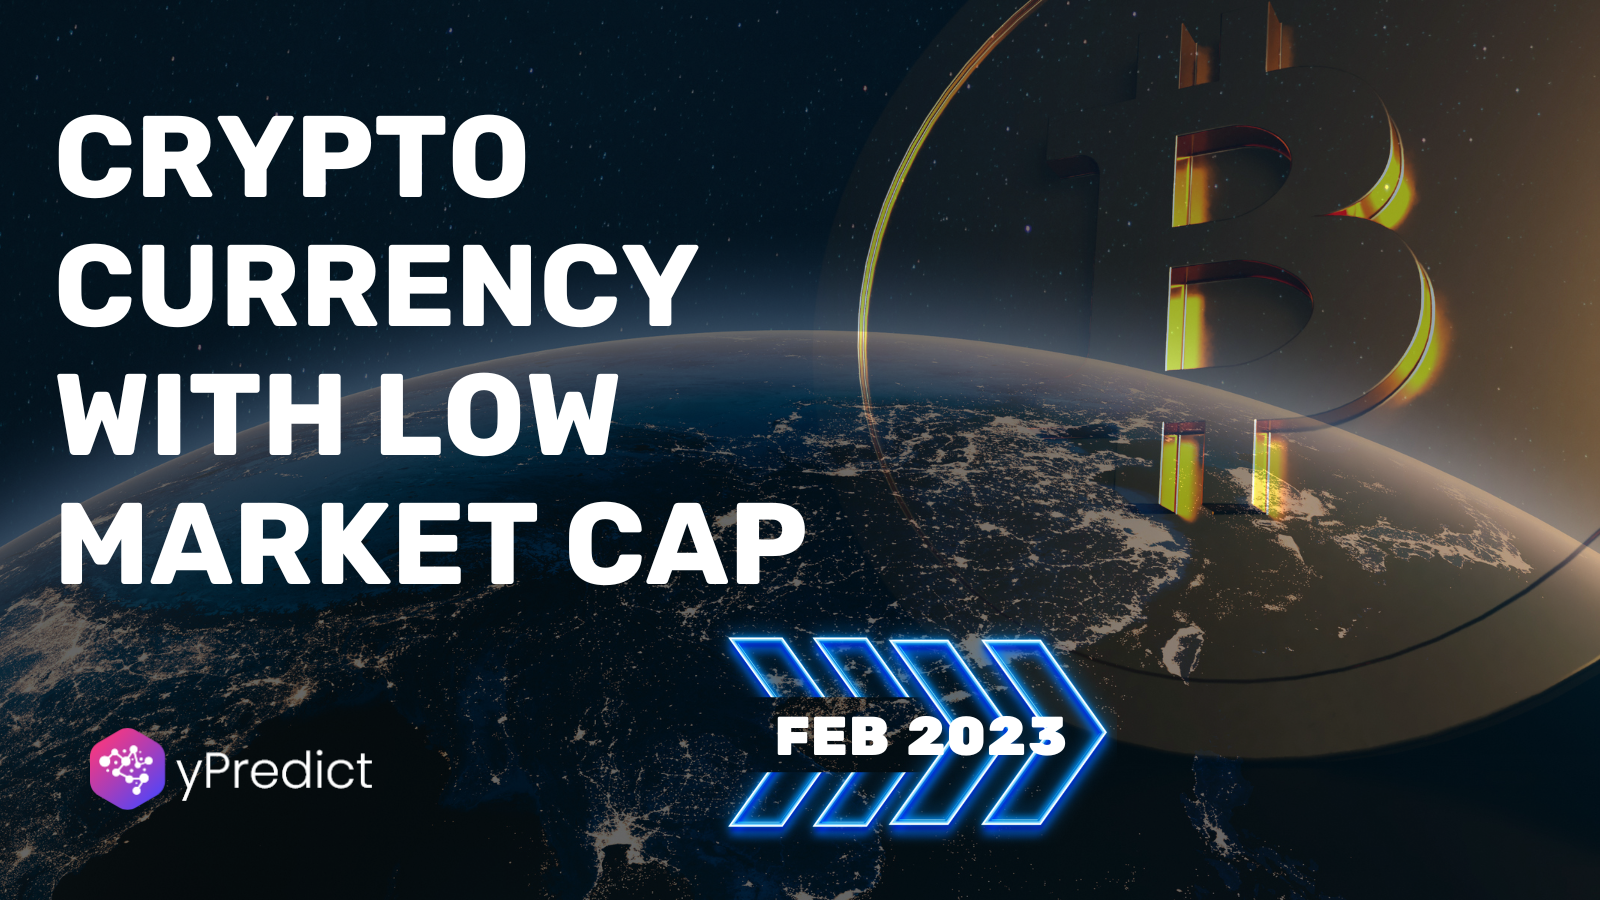 low market cap crypto